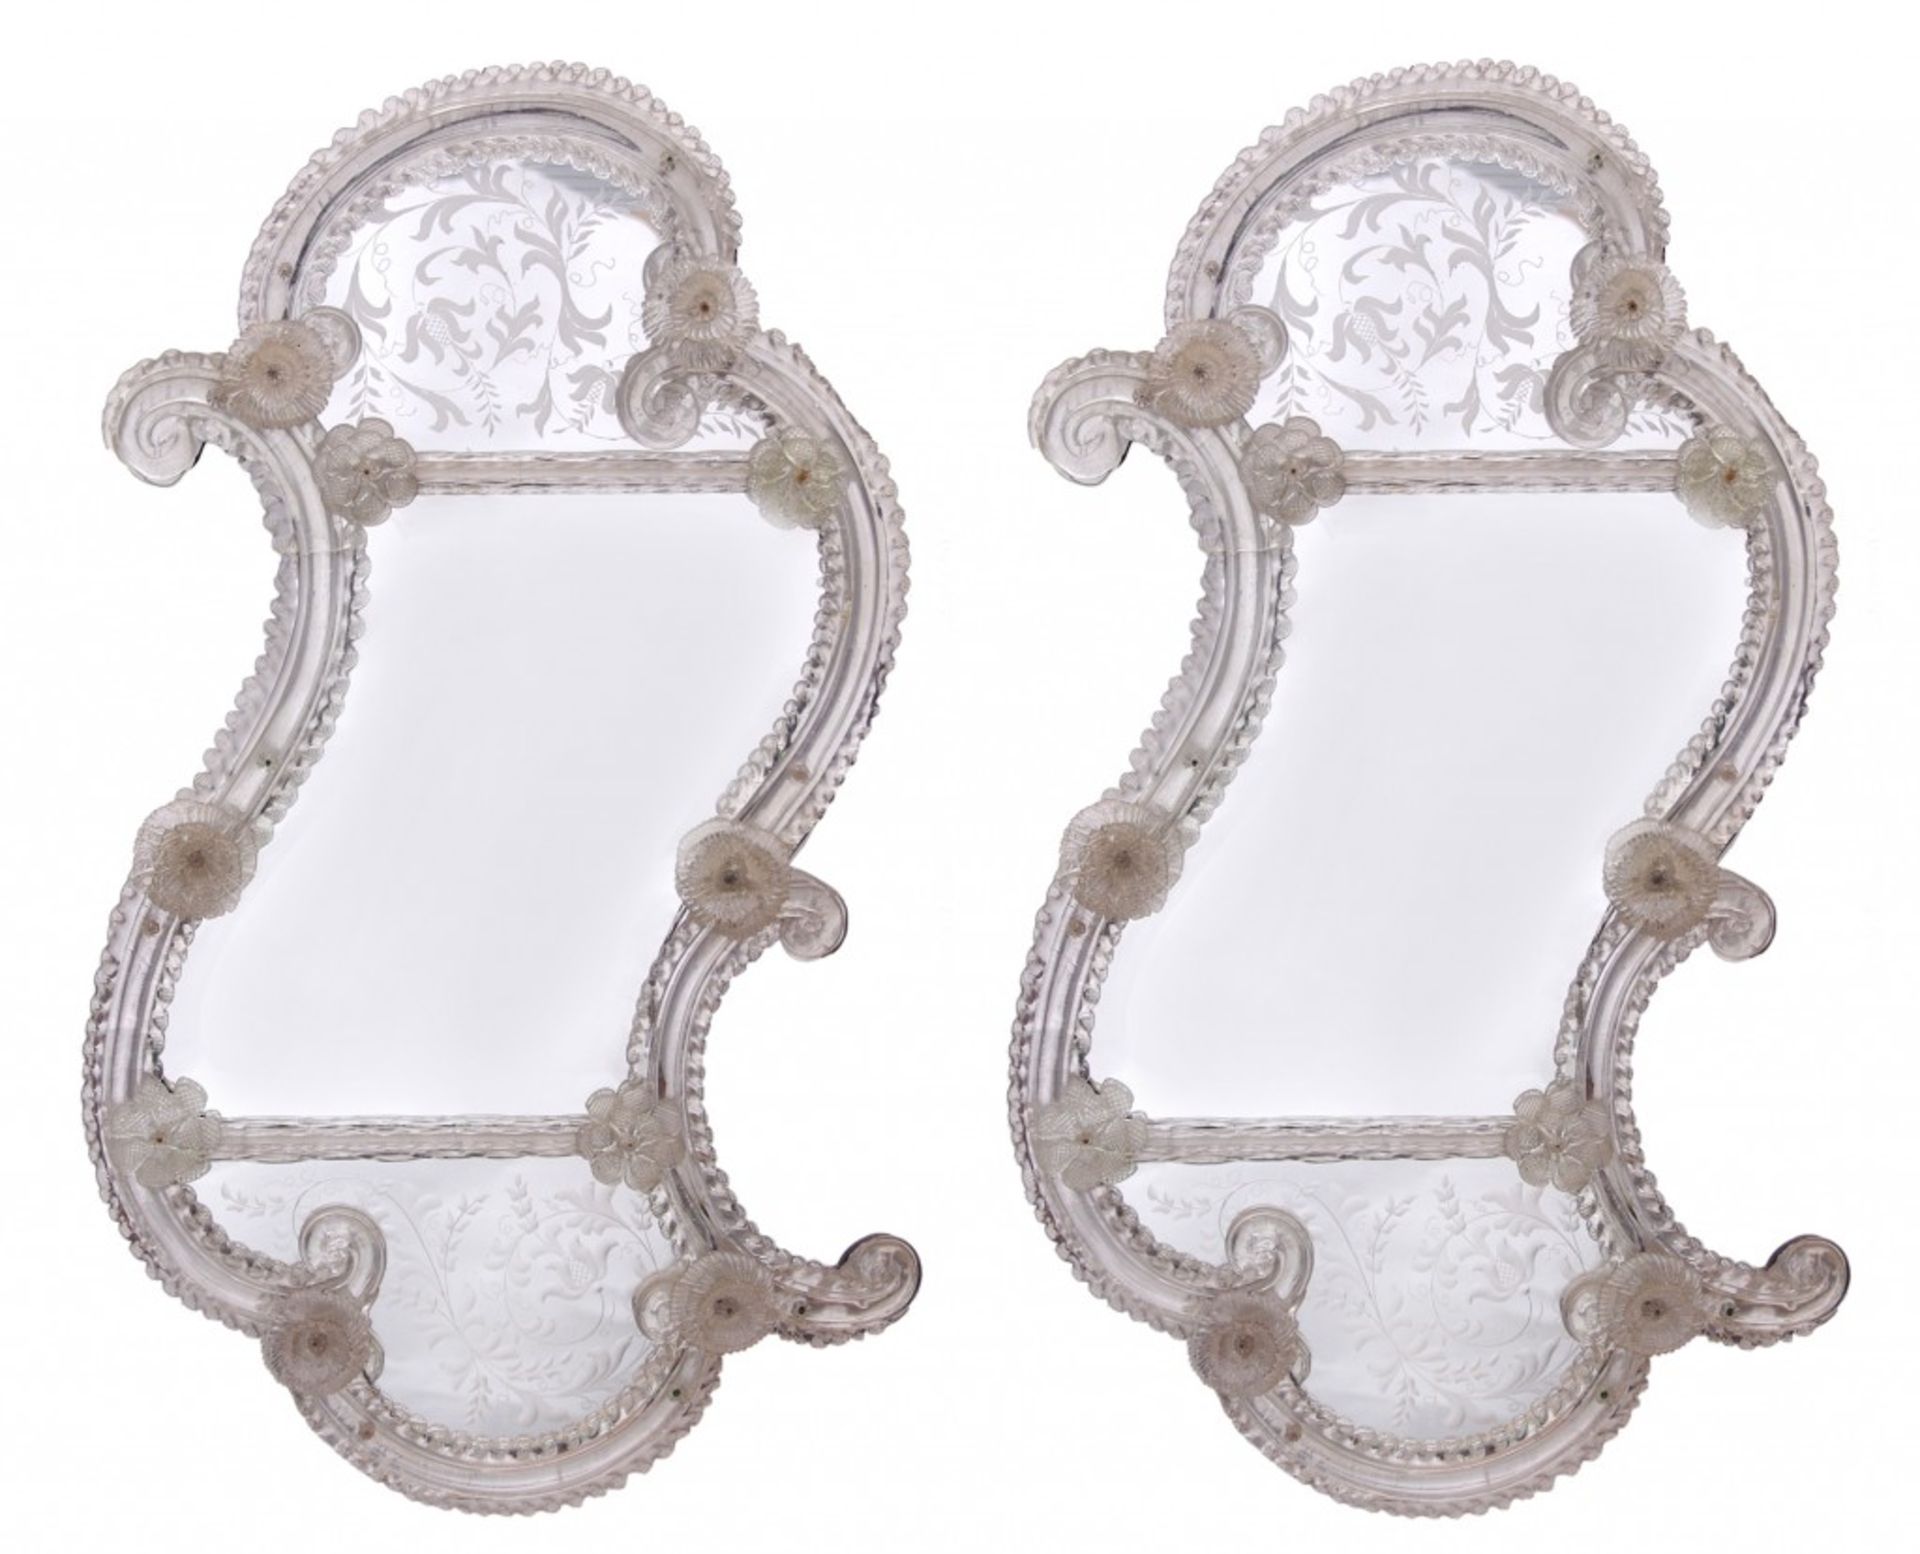 Pair of Venetian wall mirrors